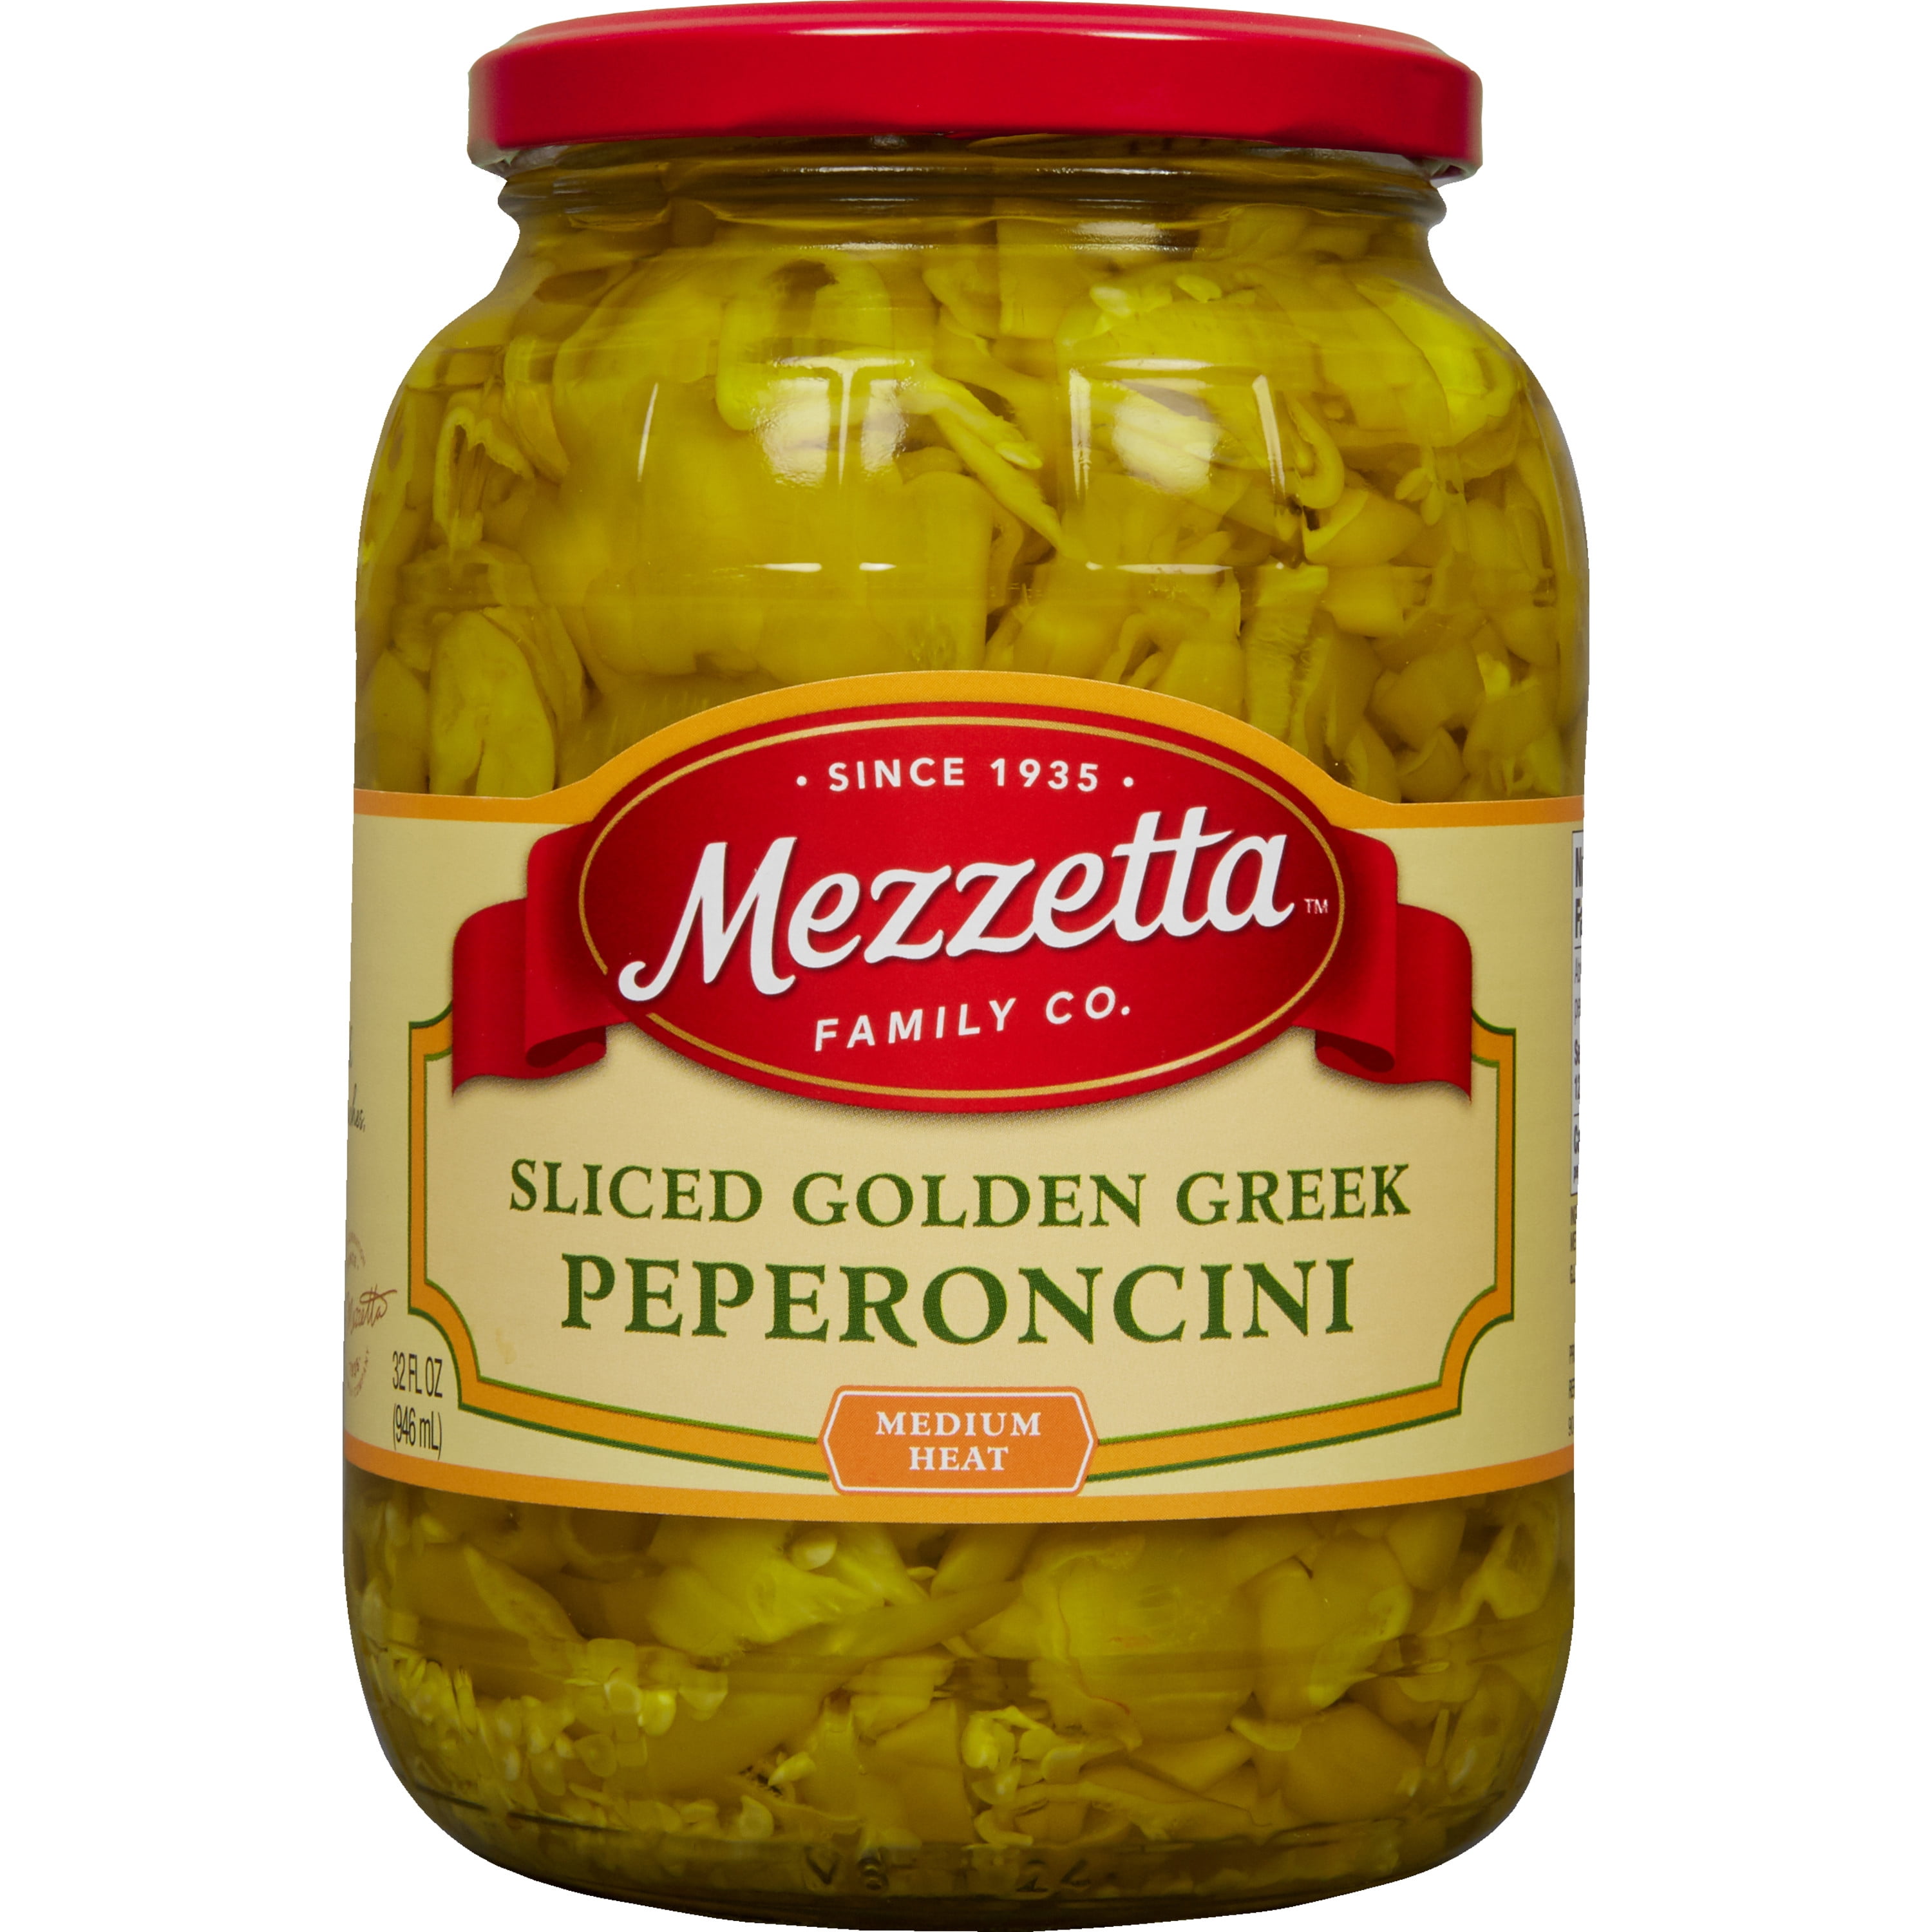 Mezzetta Sliced Golden Greek Peperoncini, 32 oz Jar 